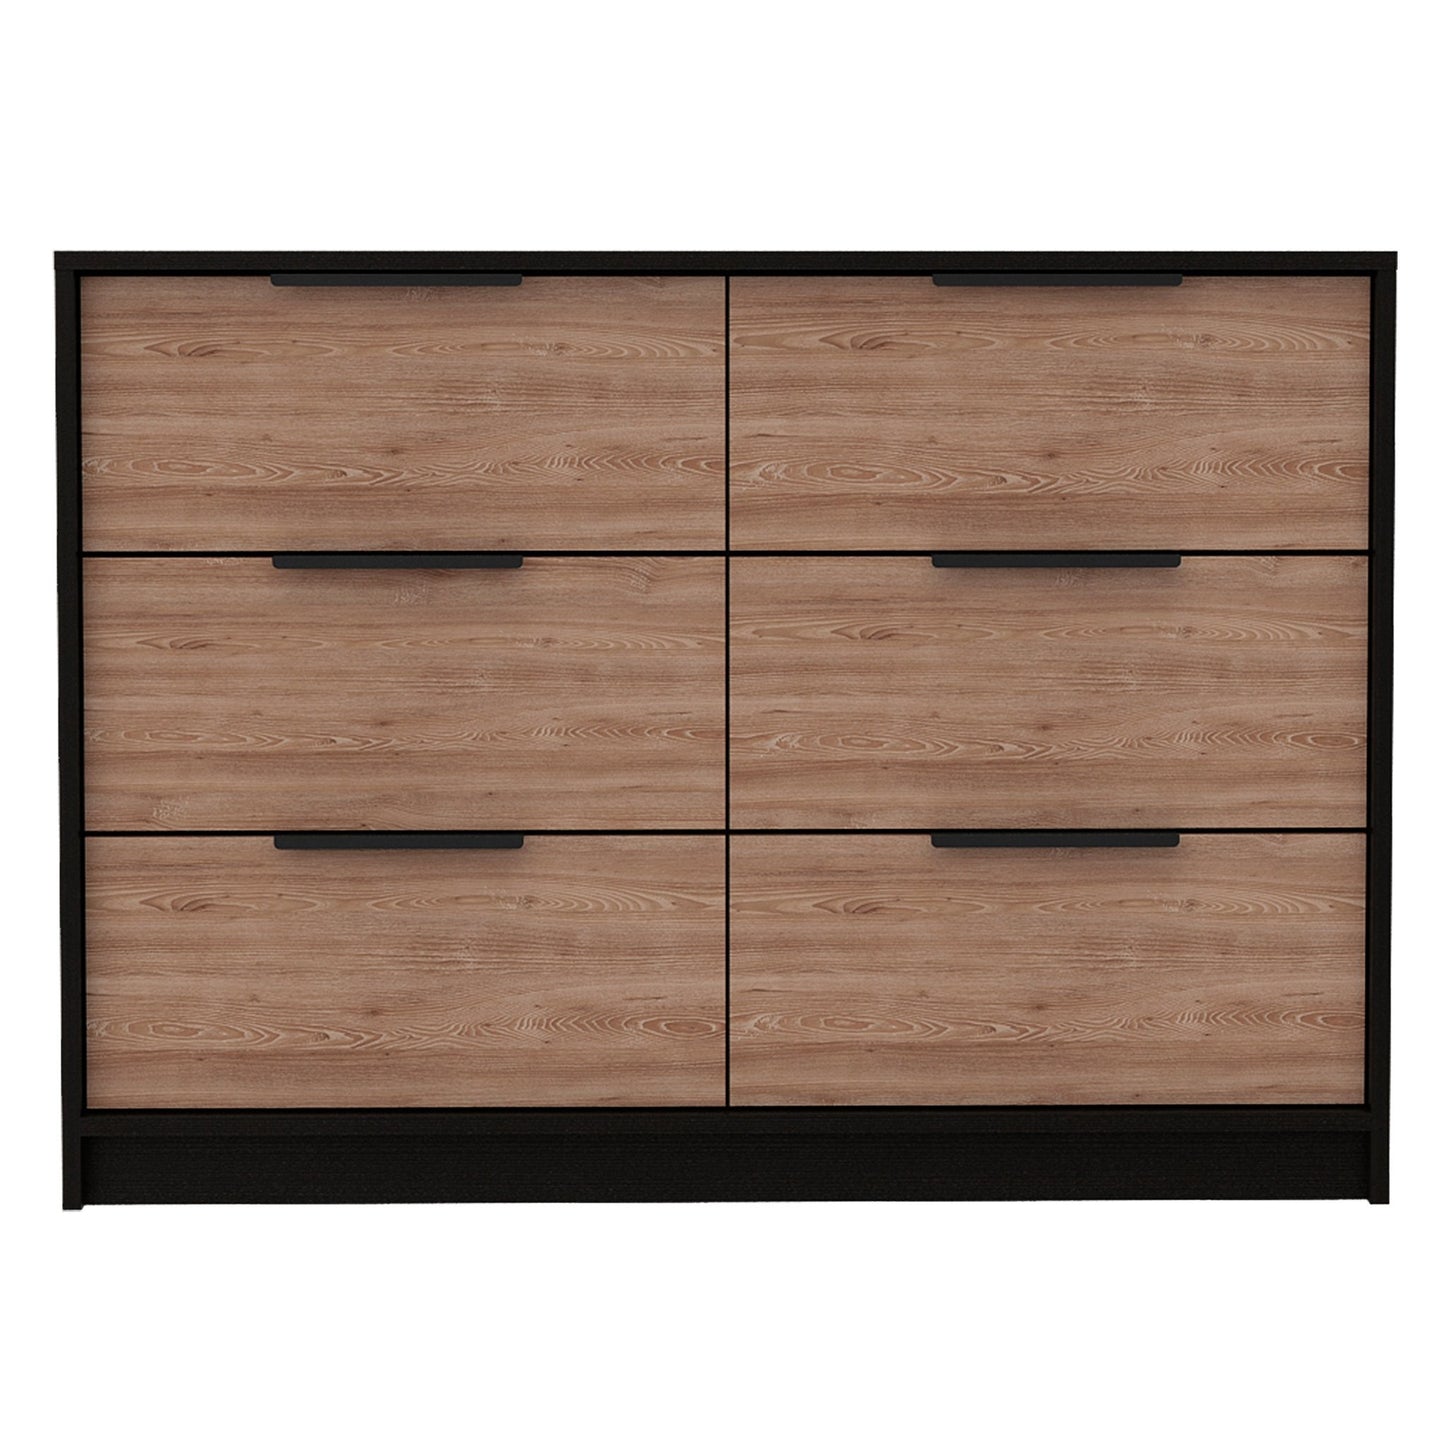 Modern Rustic Black and Natural Dresser